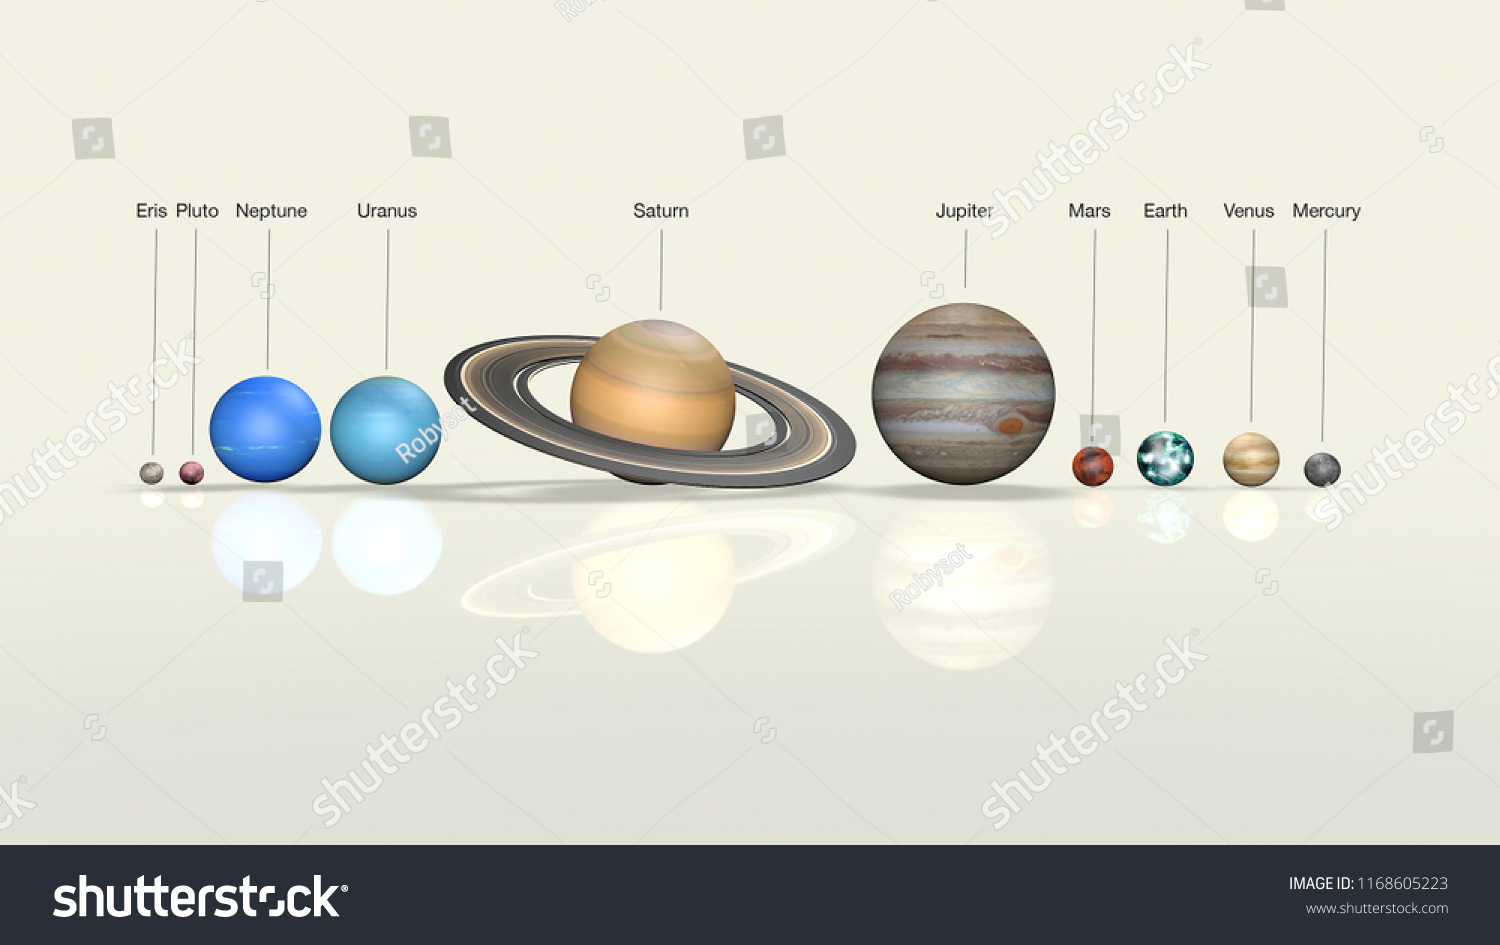 Solar System Comparison Size Planets 3d Stock Illustration 1168605223 3567